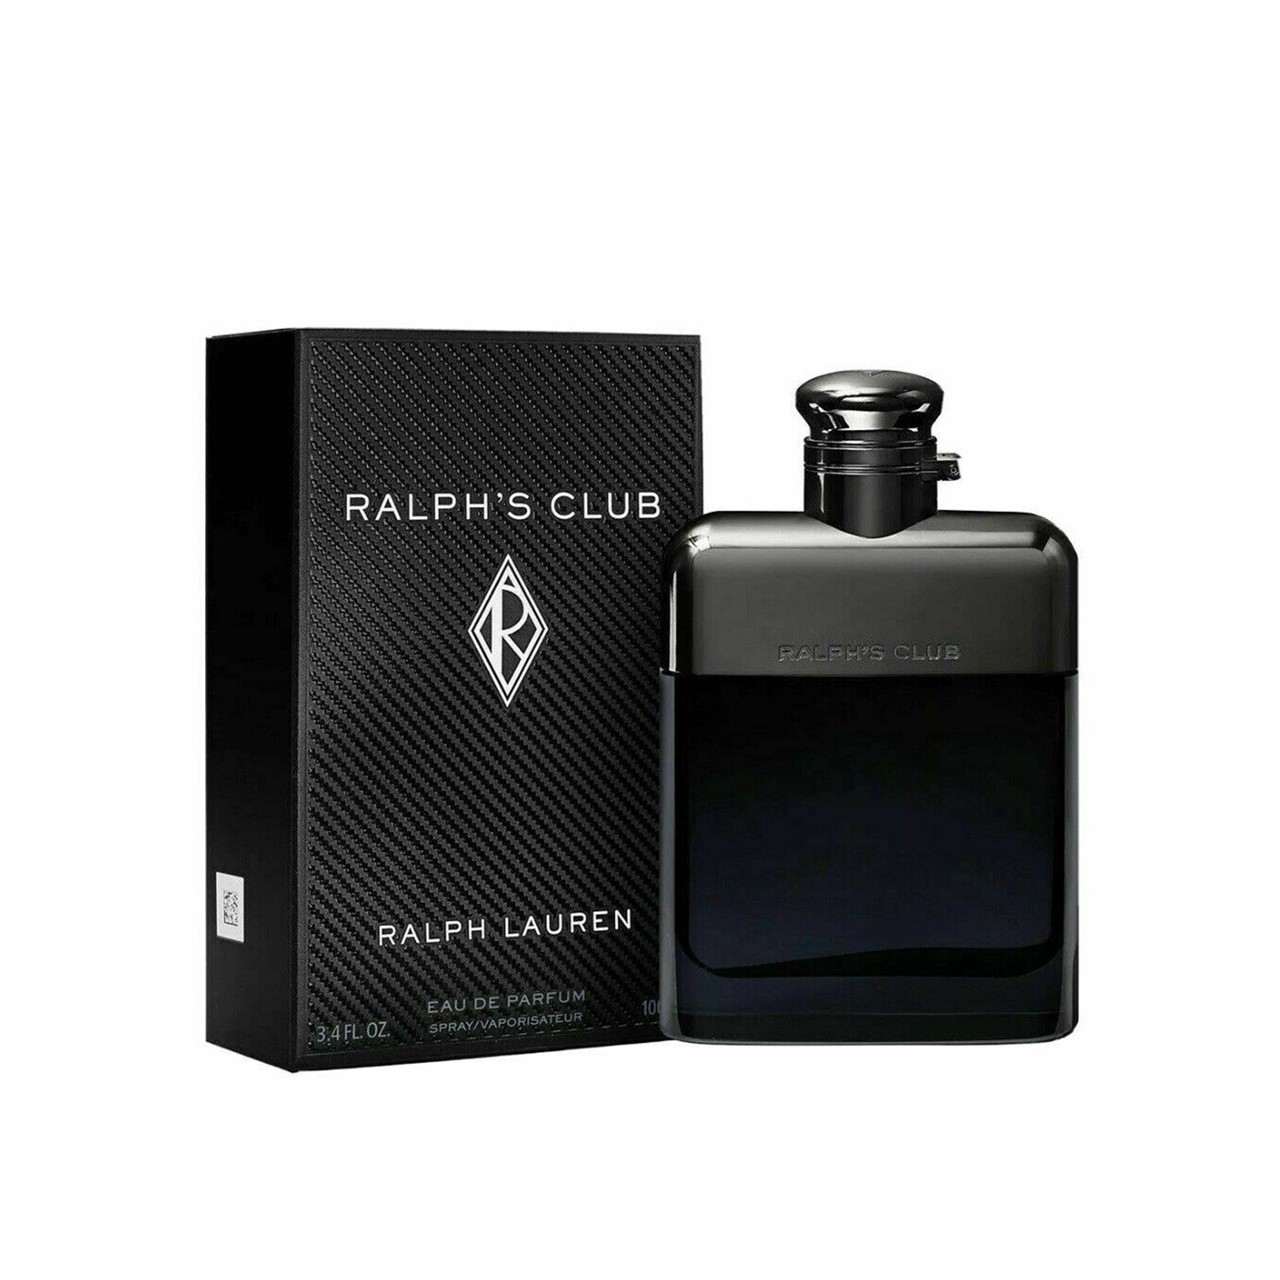 https://static.beautytocare.com/cdn-cgi/image/width=1600,height=1600,f=auto/media/catalog/product//r/a/ralph-lauren-ralph-s-club-eau-de-parfum-for-men.jpg